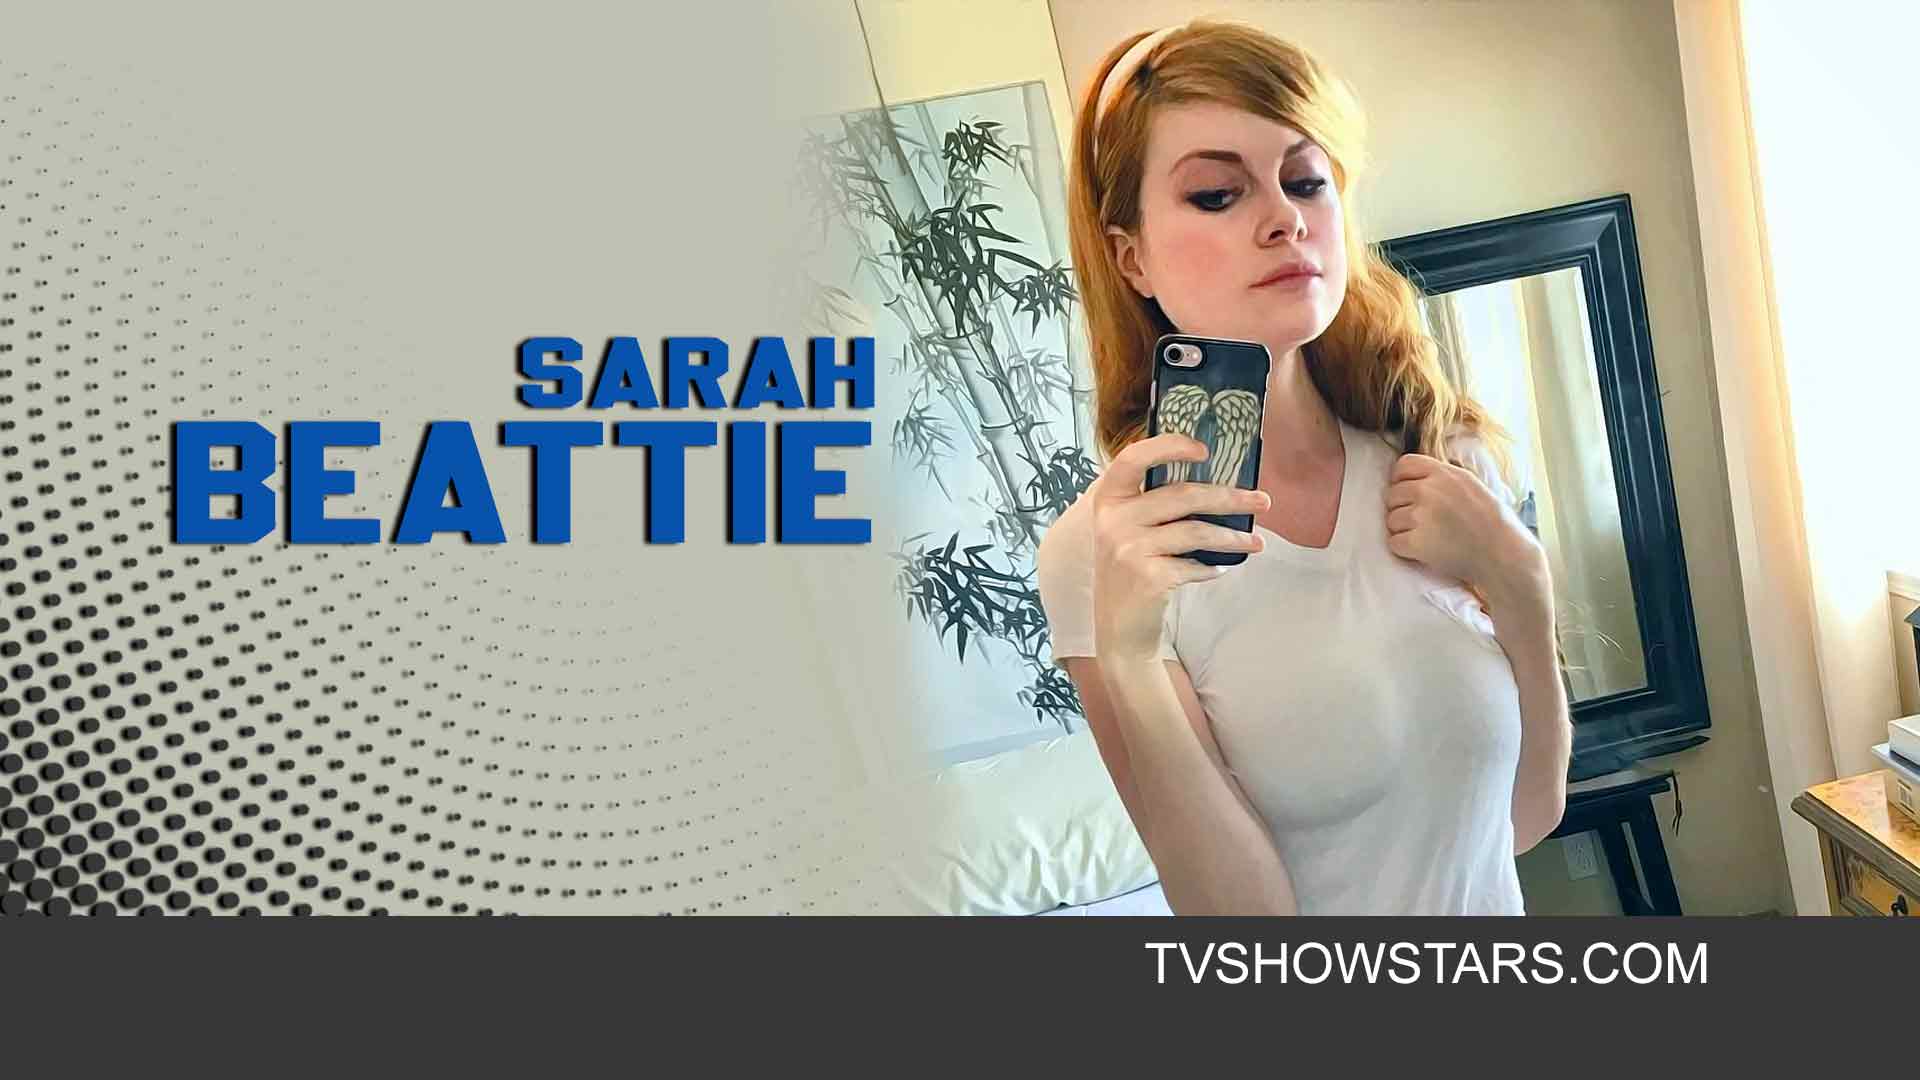 Sarah beattie comedy